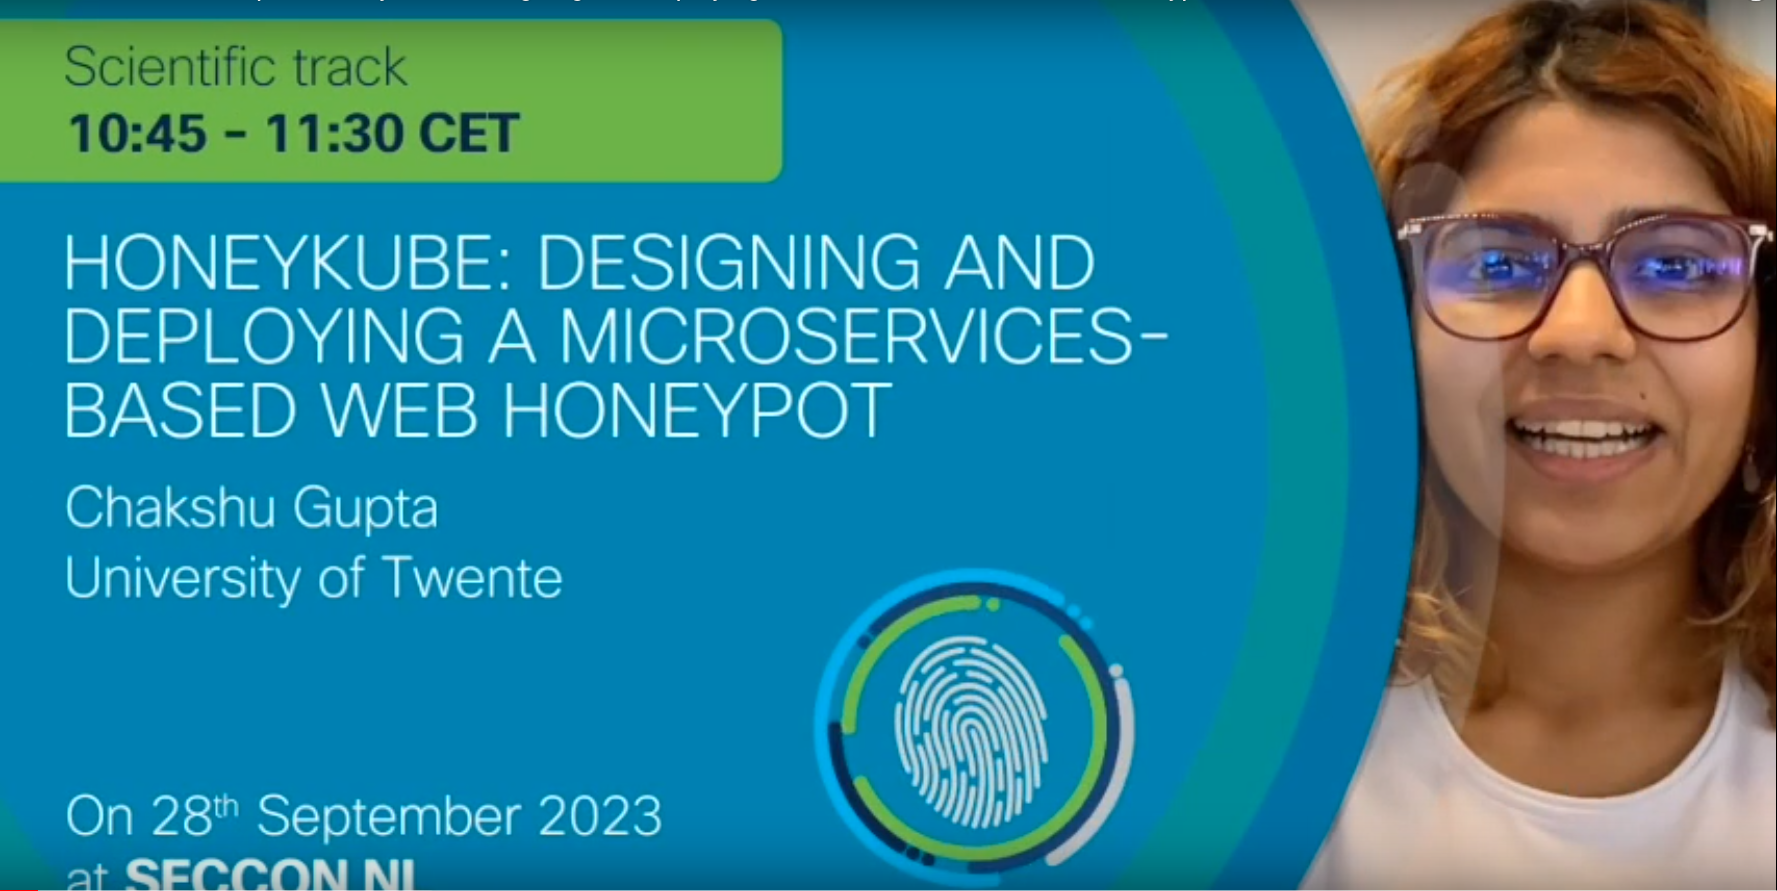 SECCON NL - Chakshu Gupta - HoneyKube: Designing and Deploying a Microservices-based Web Honeypot